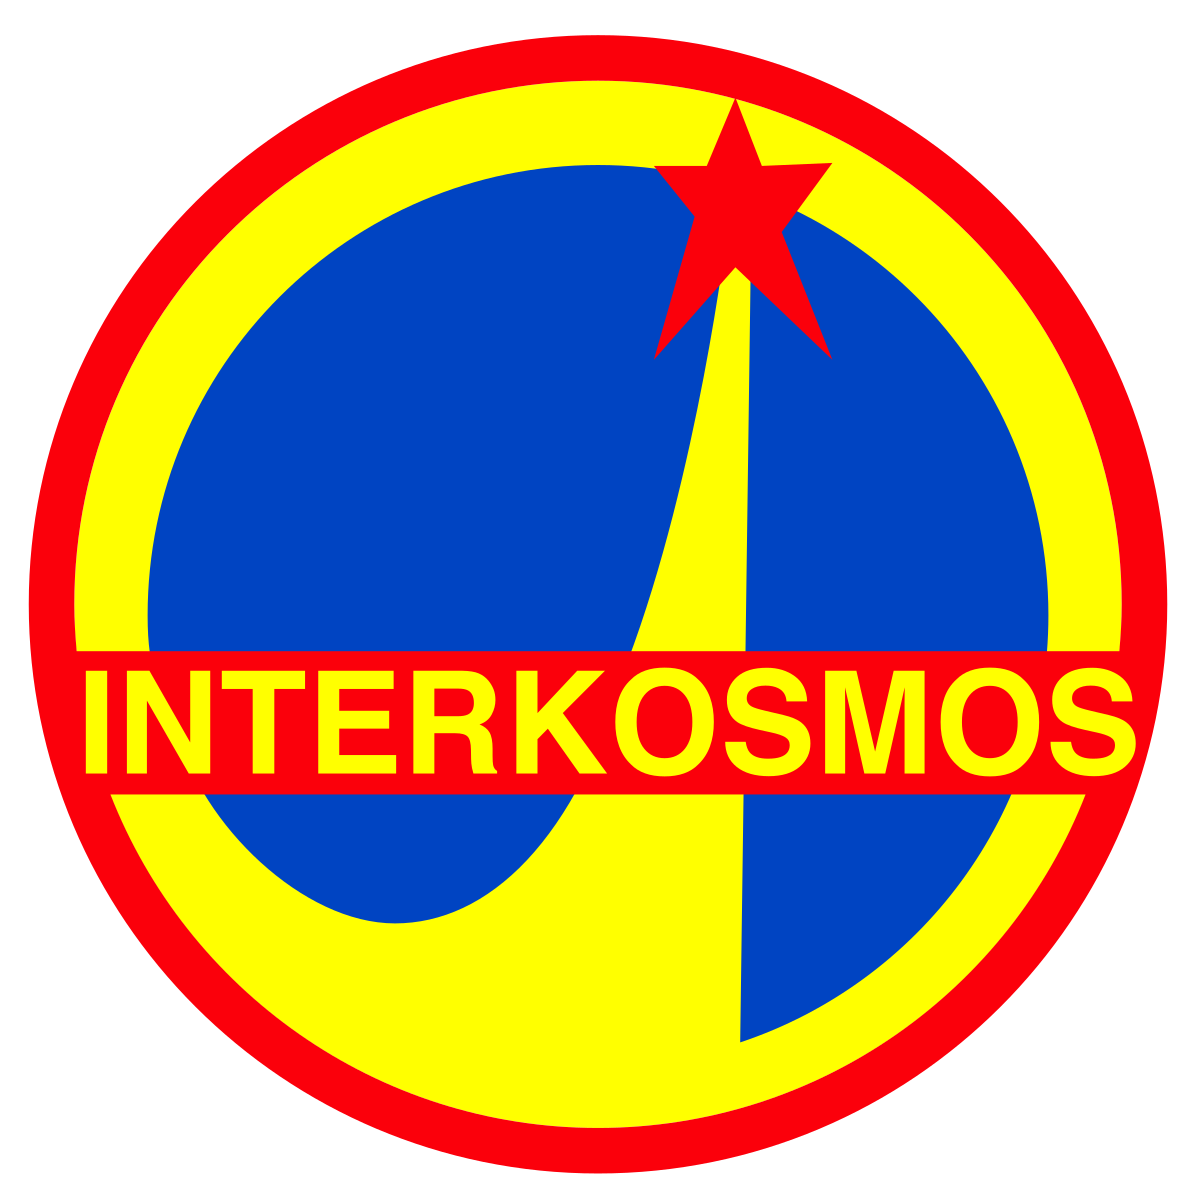 Soyuz-37 Interkosmos Soviet Space Programme Patch 1980